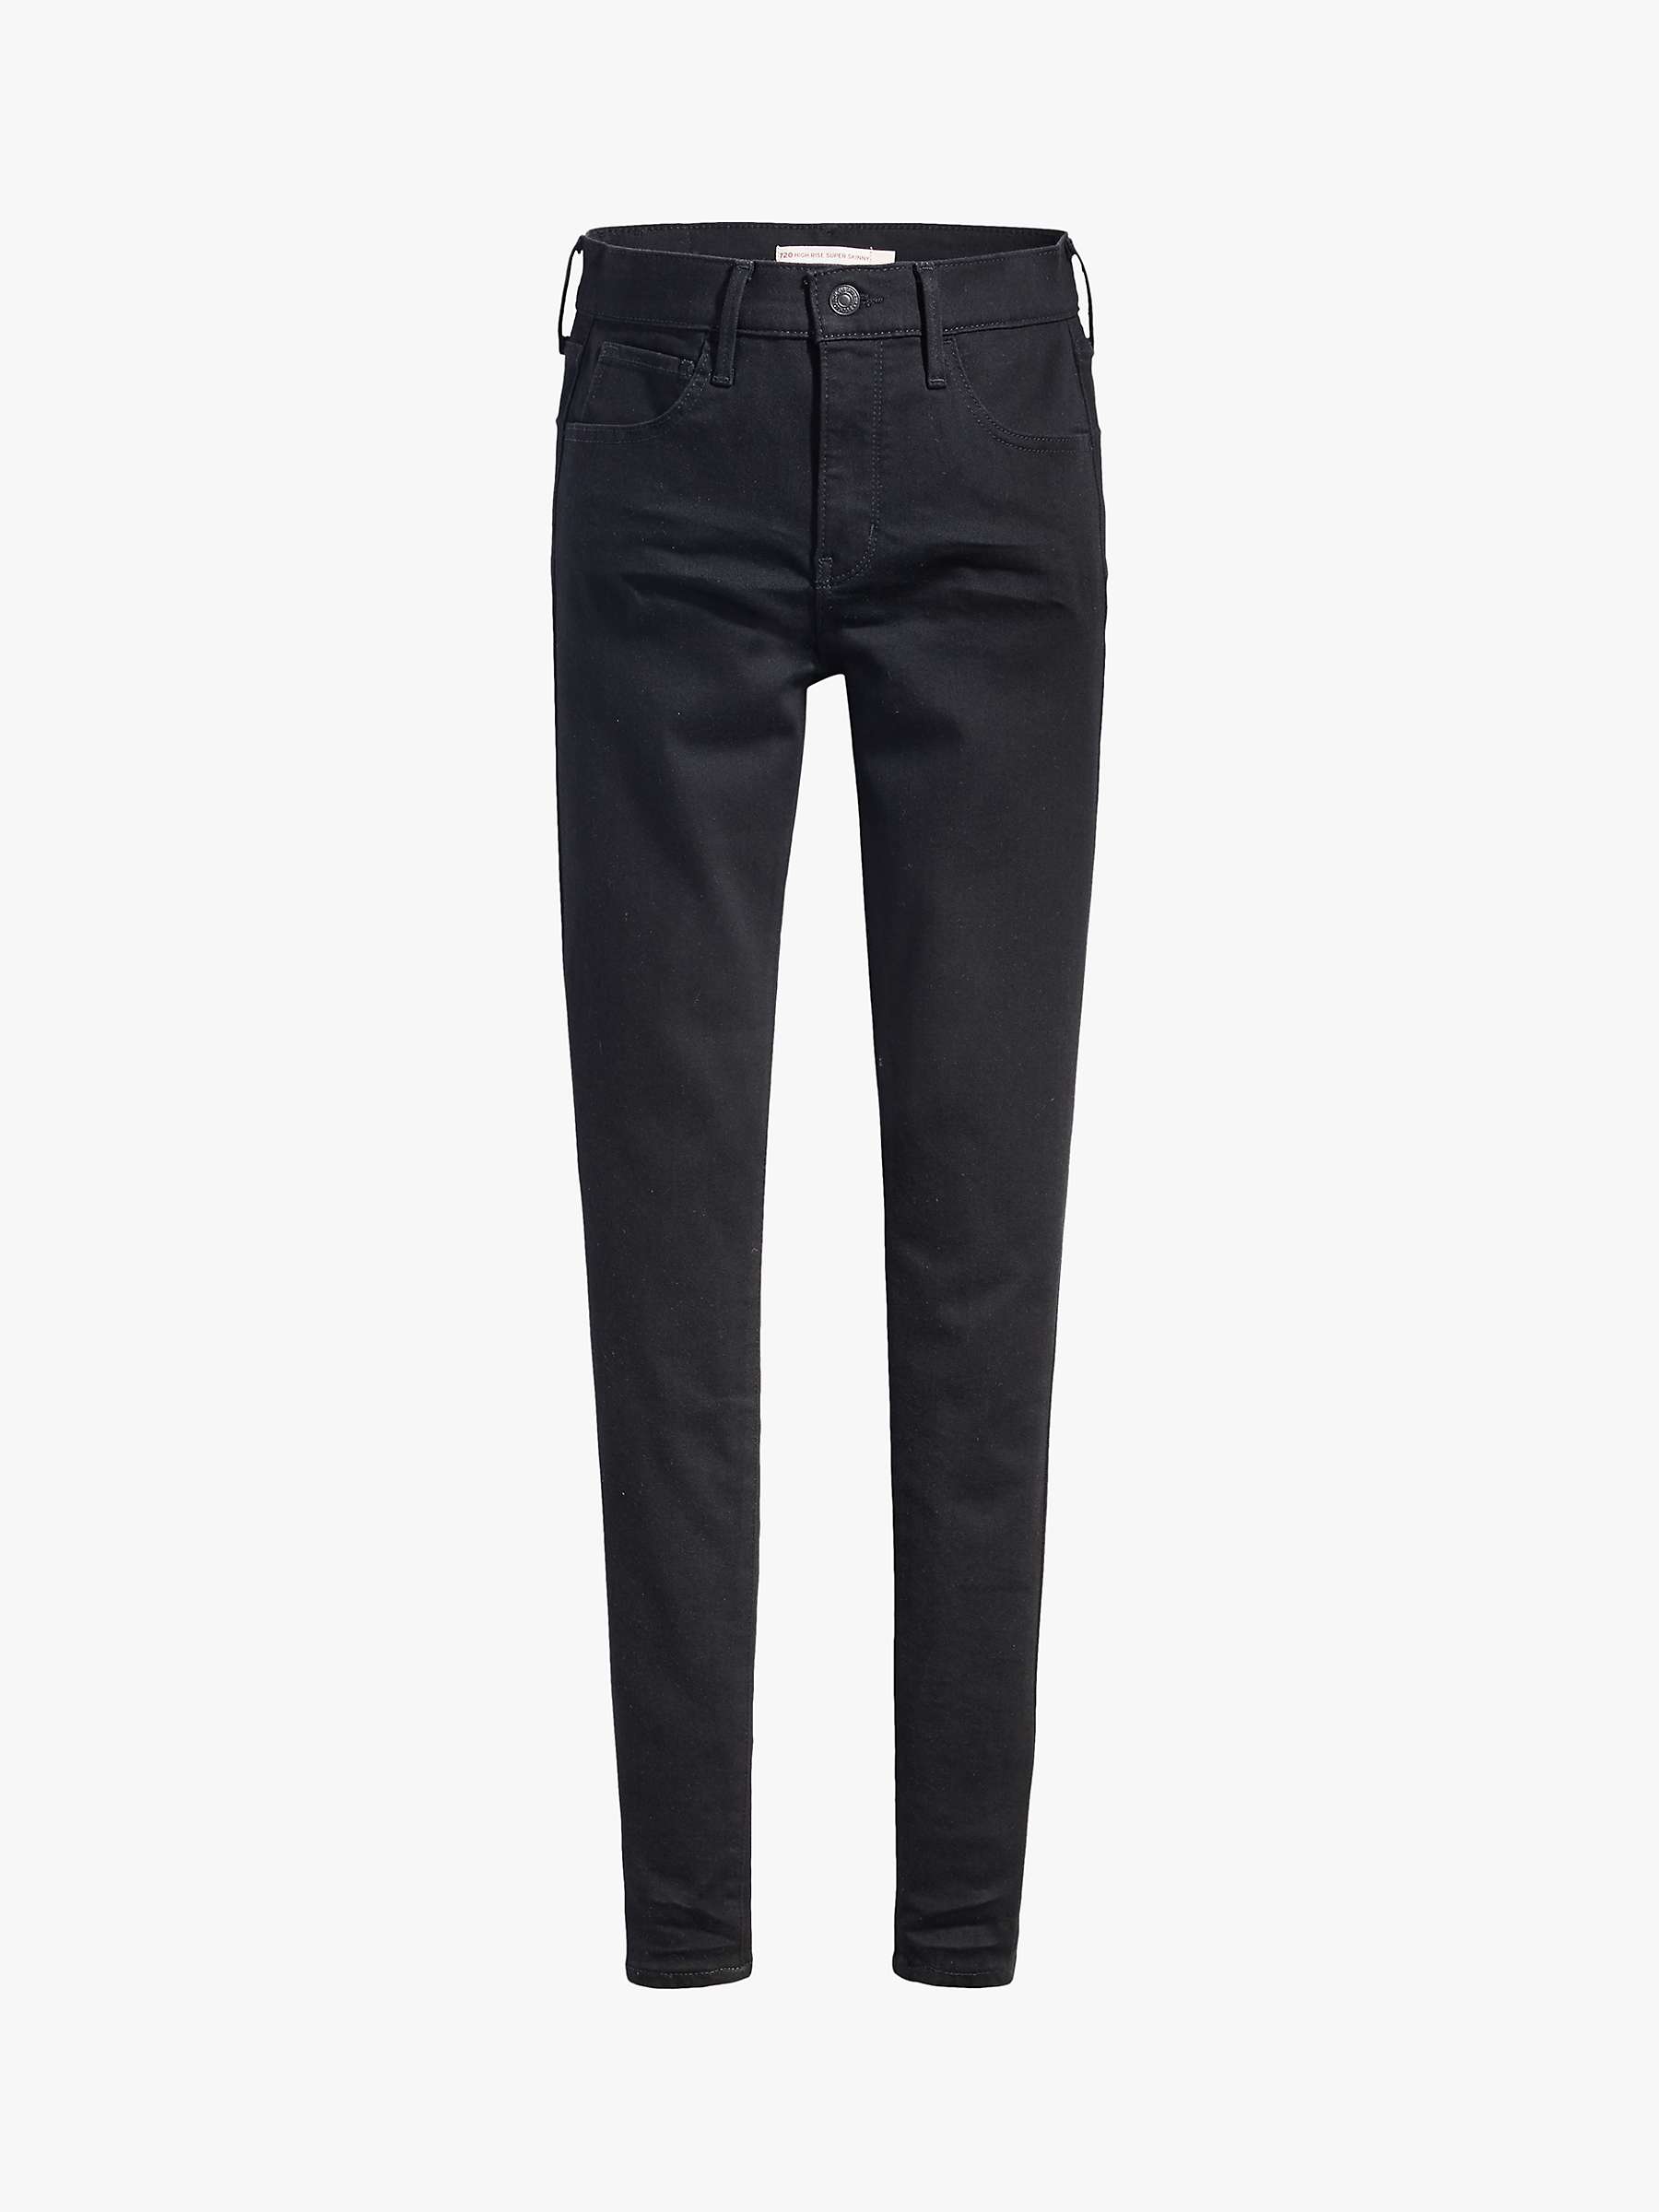 Buy Levi's 720 High Rise Super Skinny Jeans, Black Cestial Online at johnlewis.com